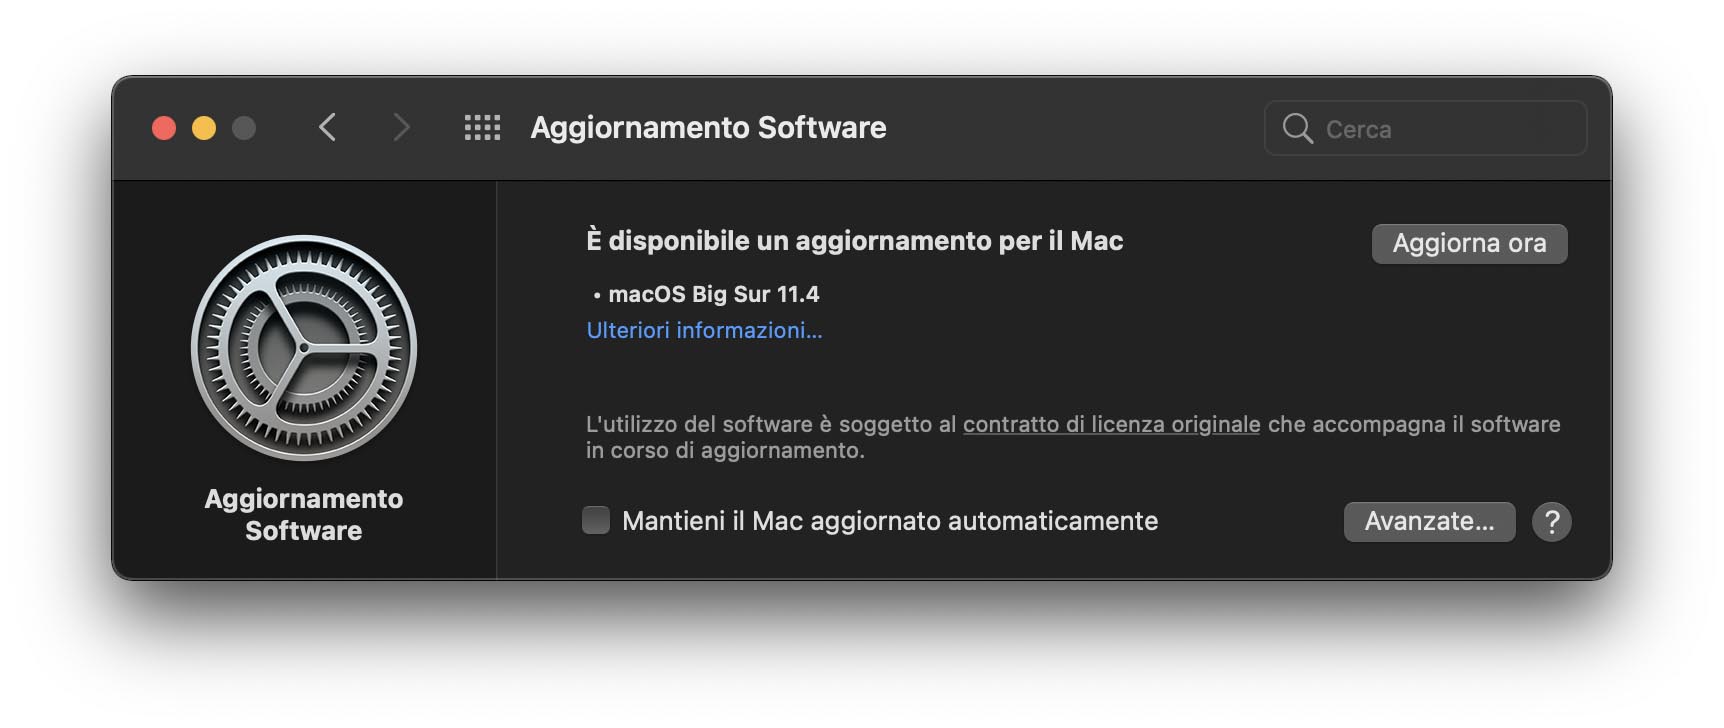 Disponibile aggiornamento a macOS Big Sur 11.4